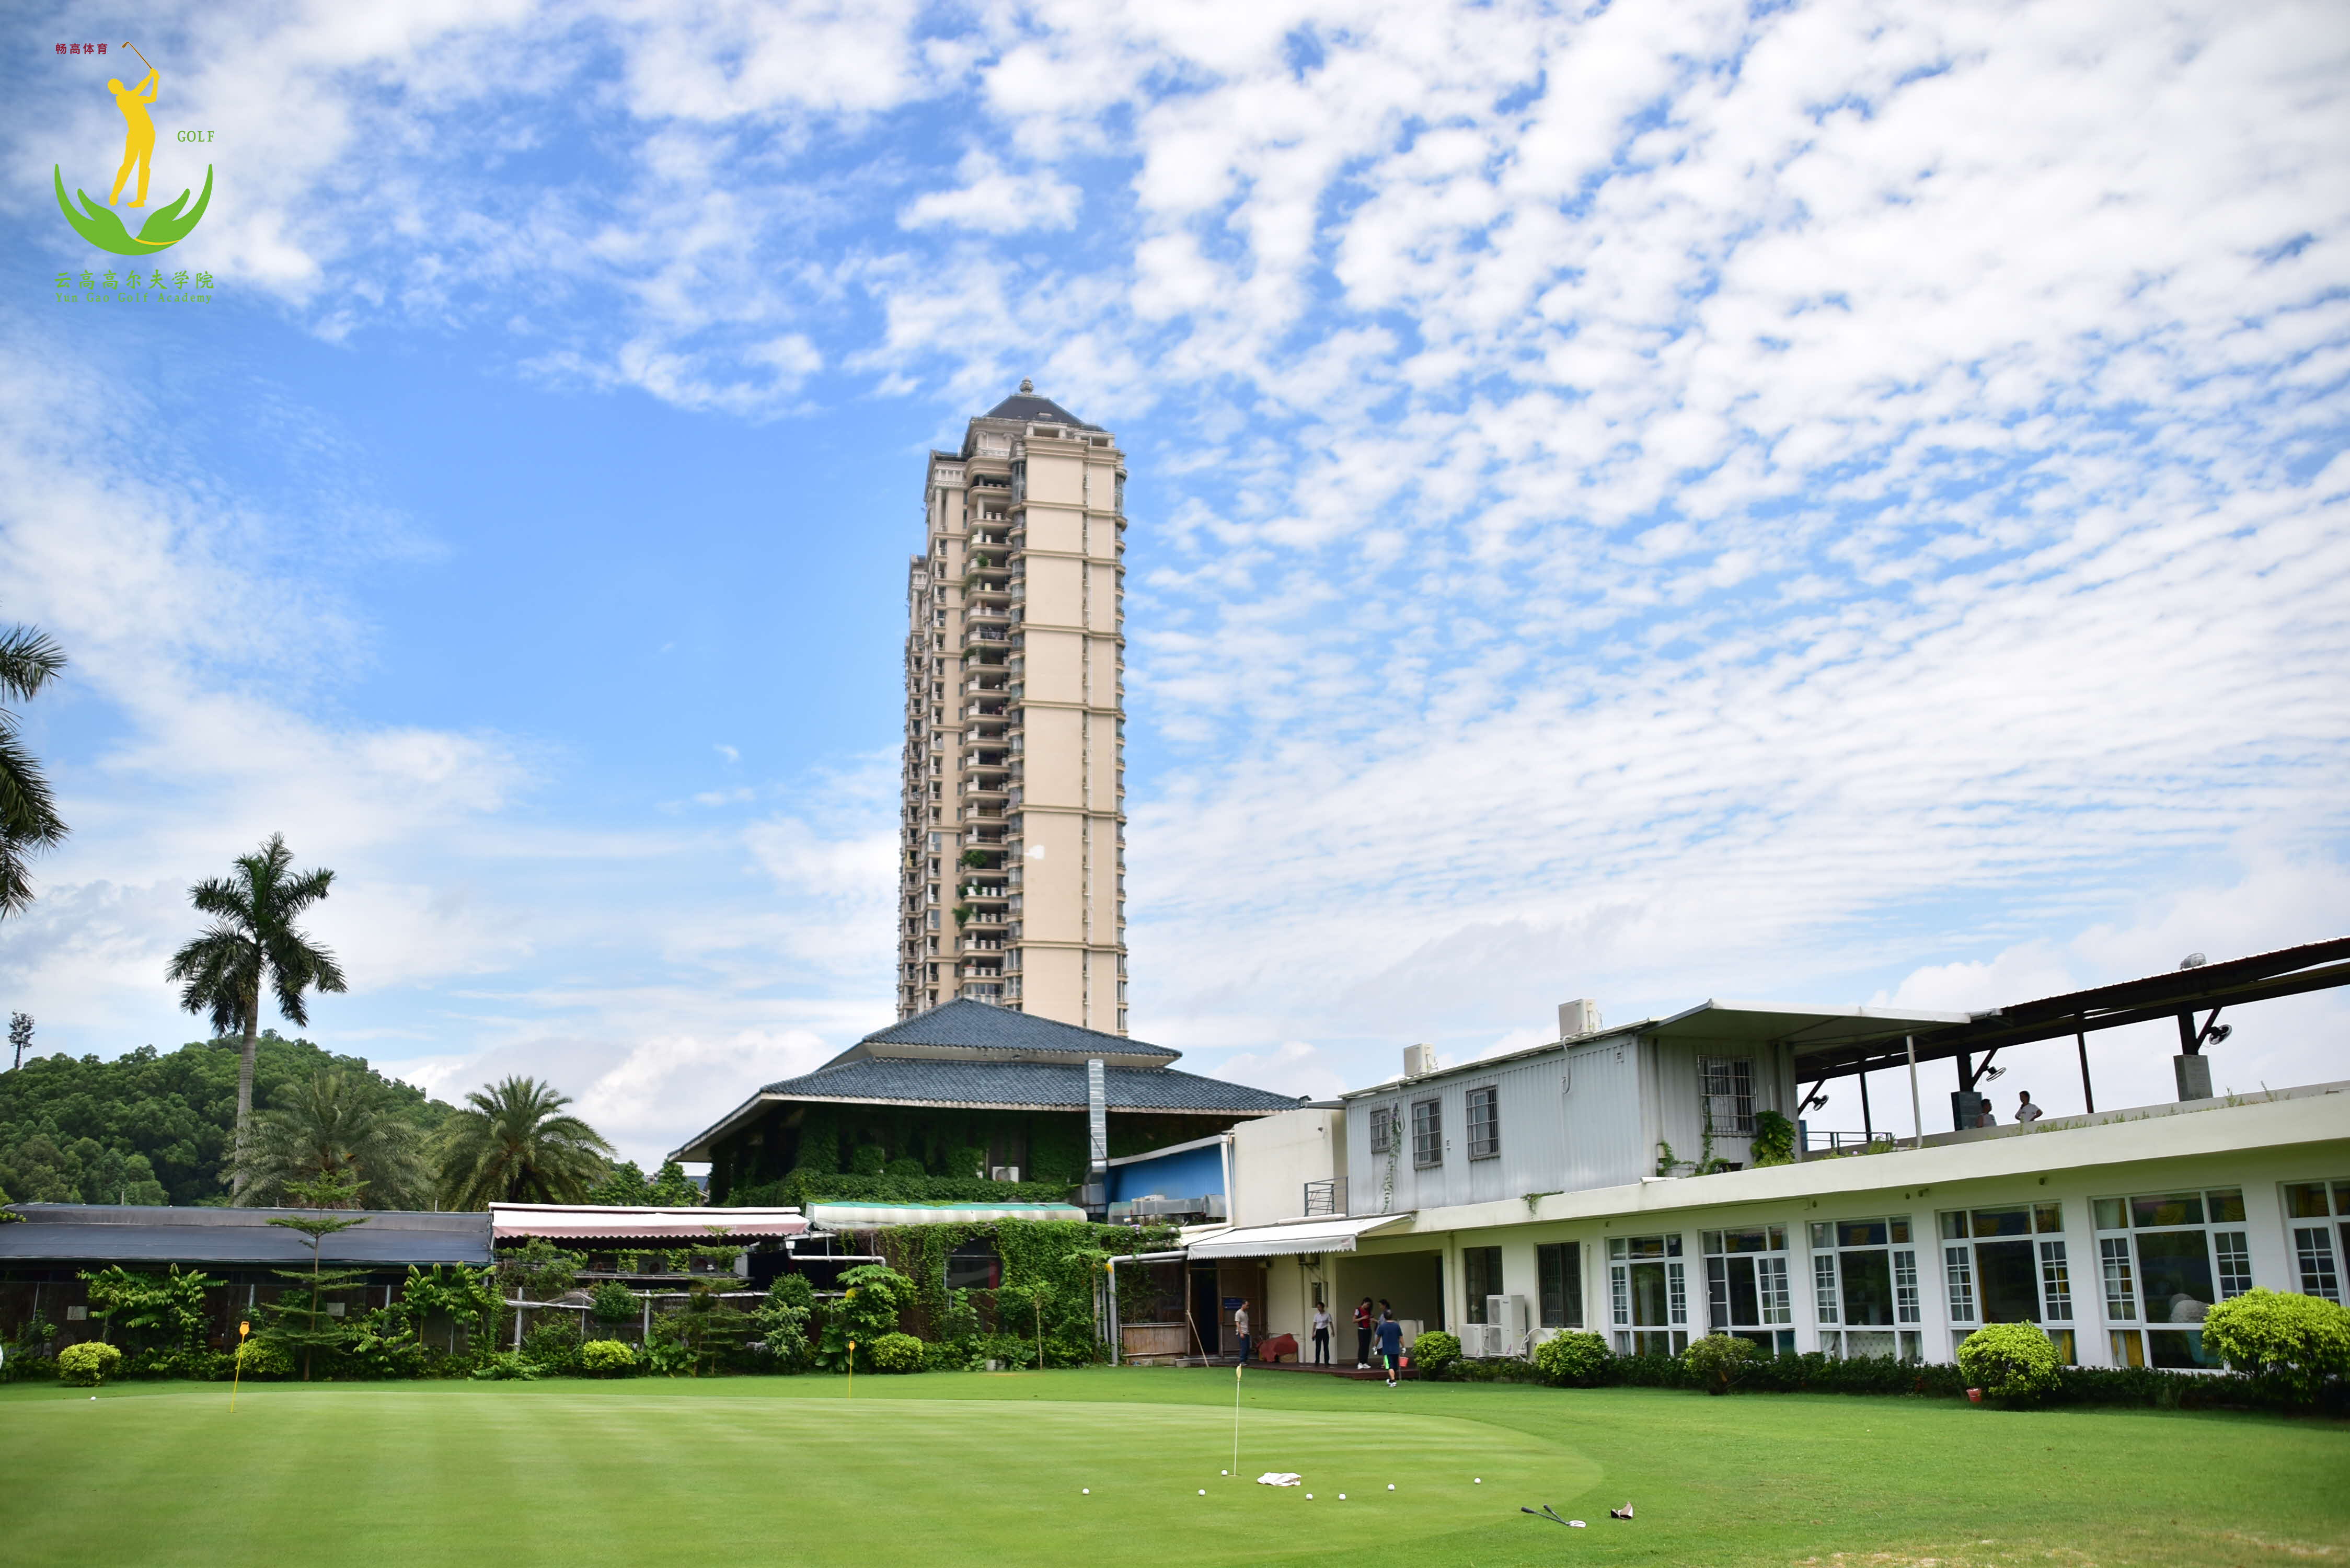 Yun Gao Golf Academy